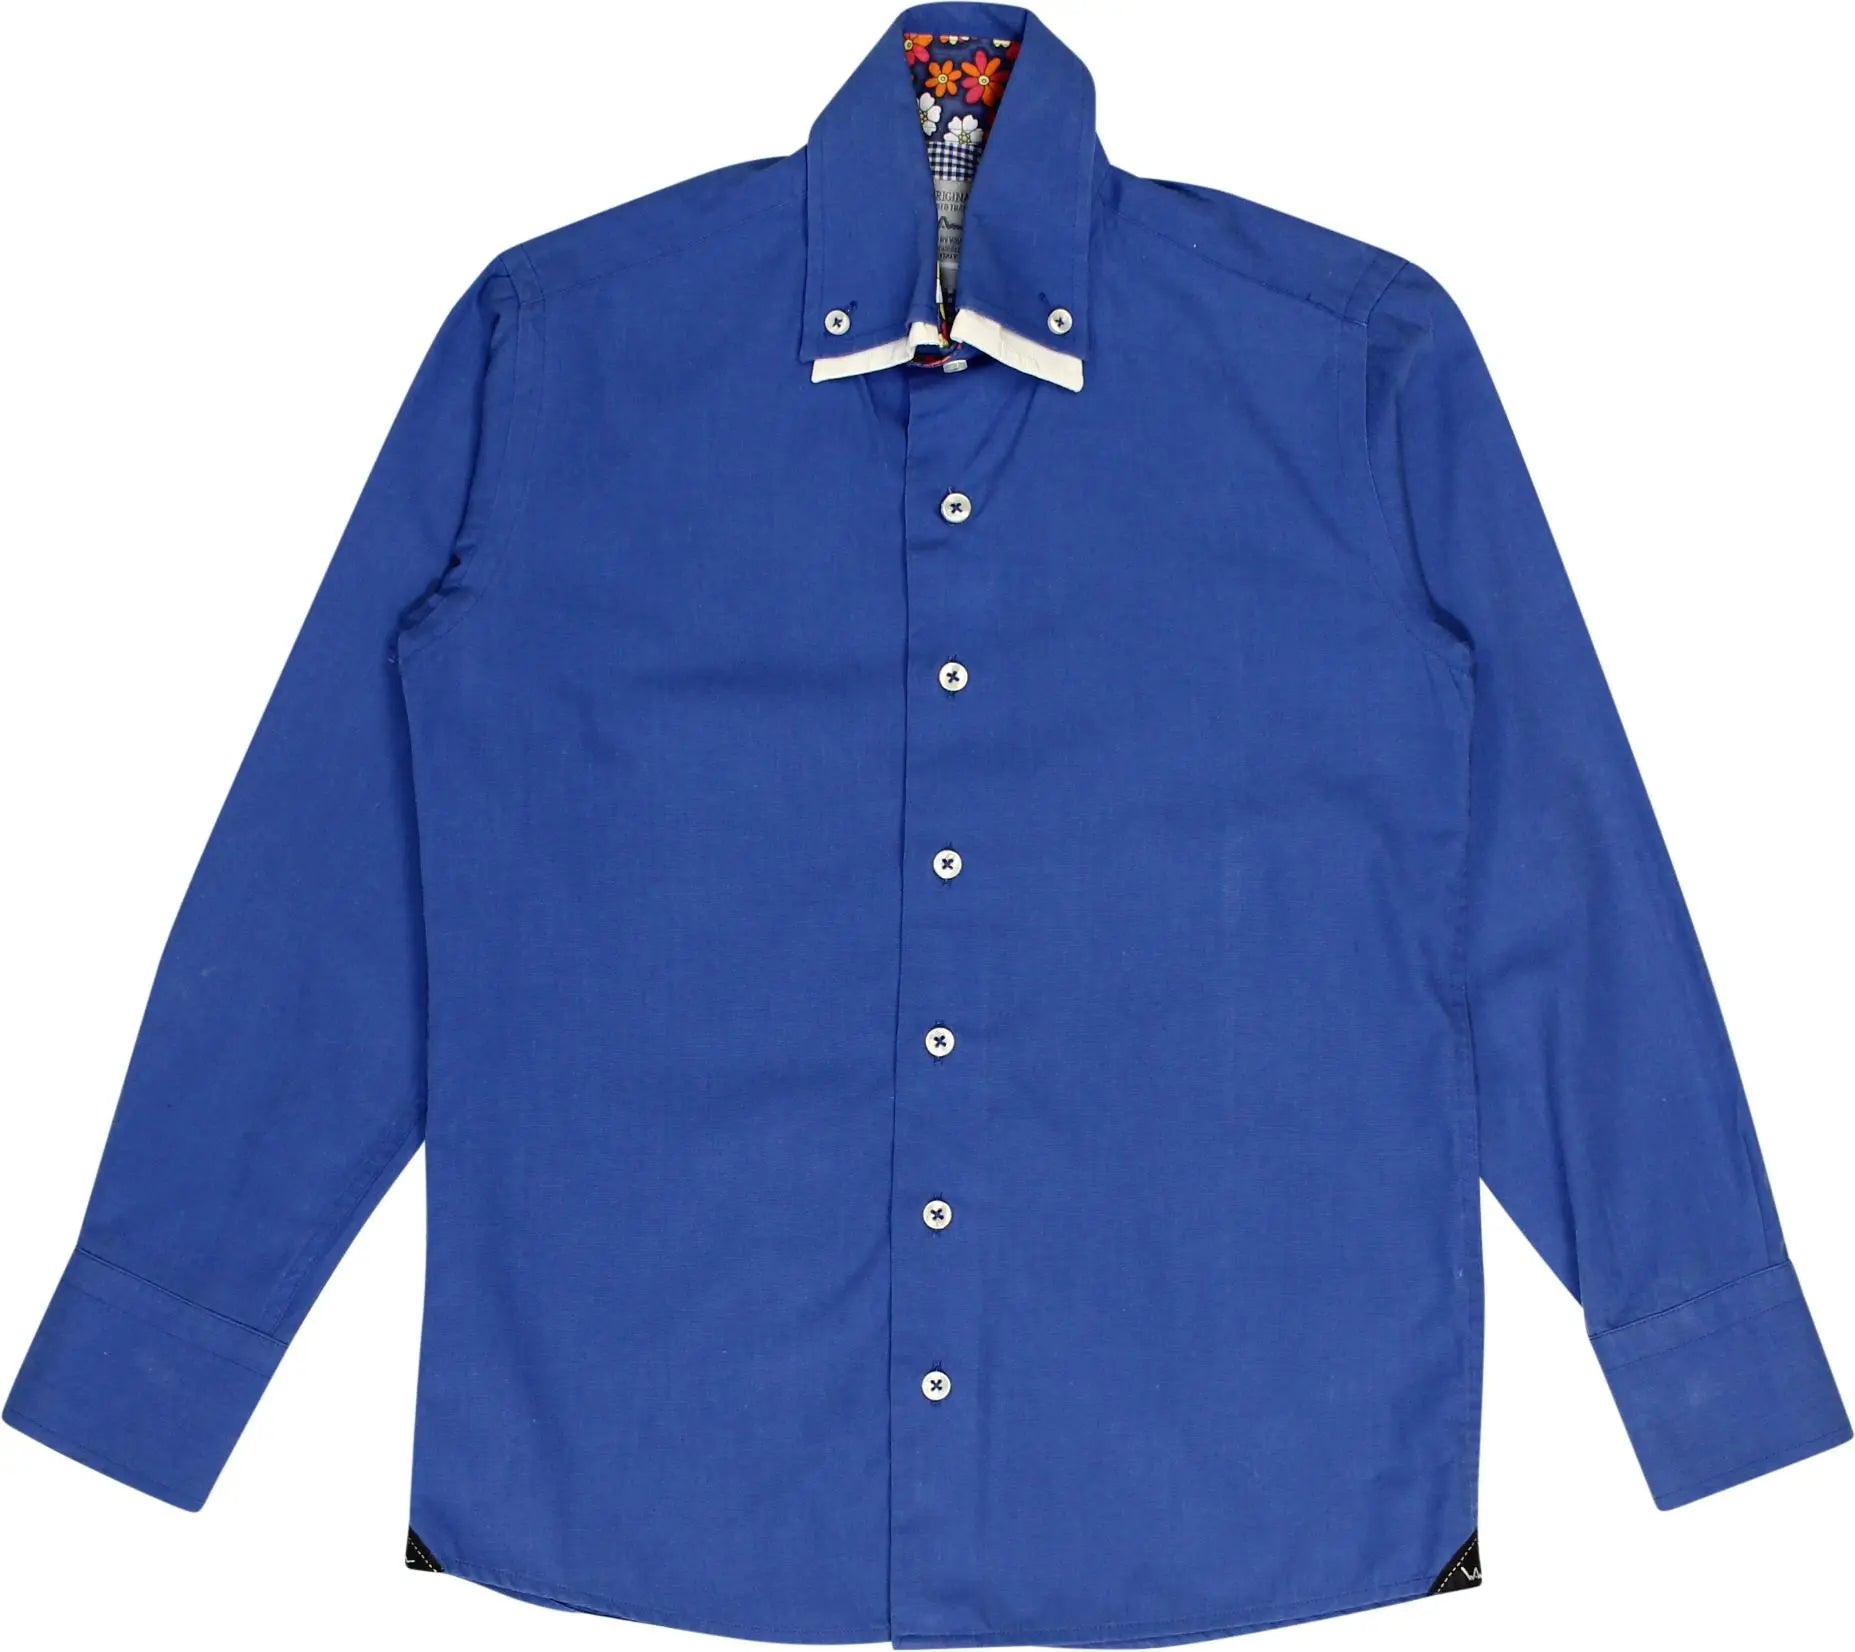 WAM Denim - Blue Shirt- ThriftTale.com - Vintage and second handclothing